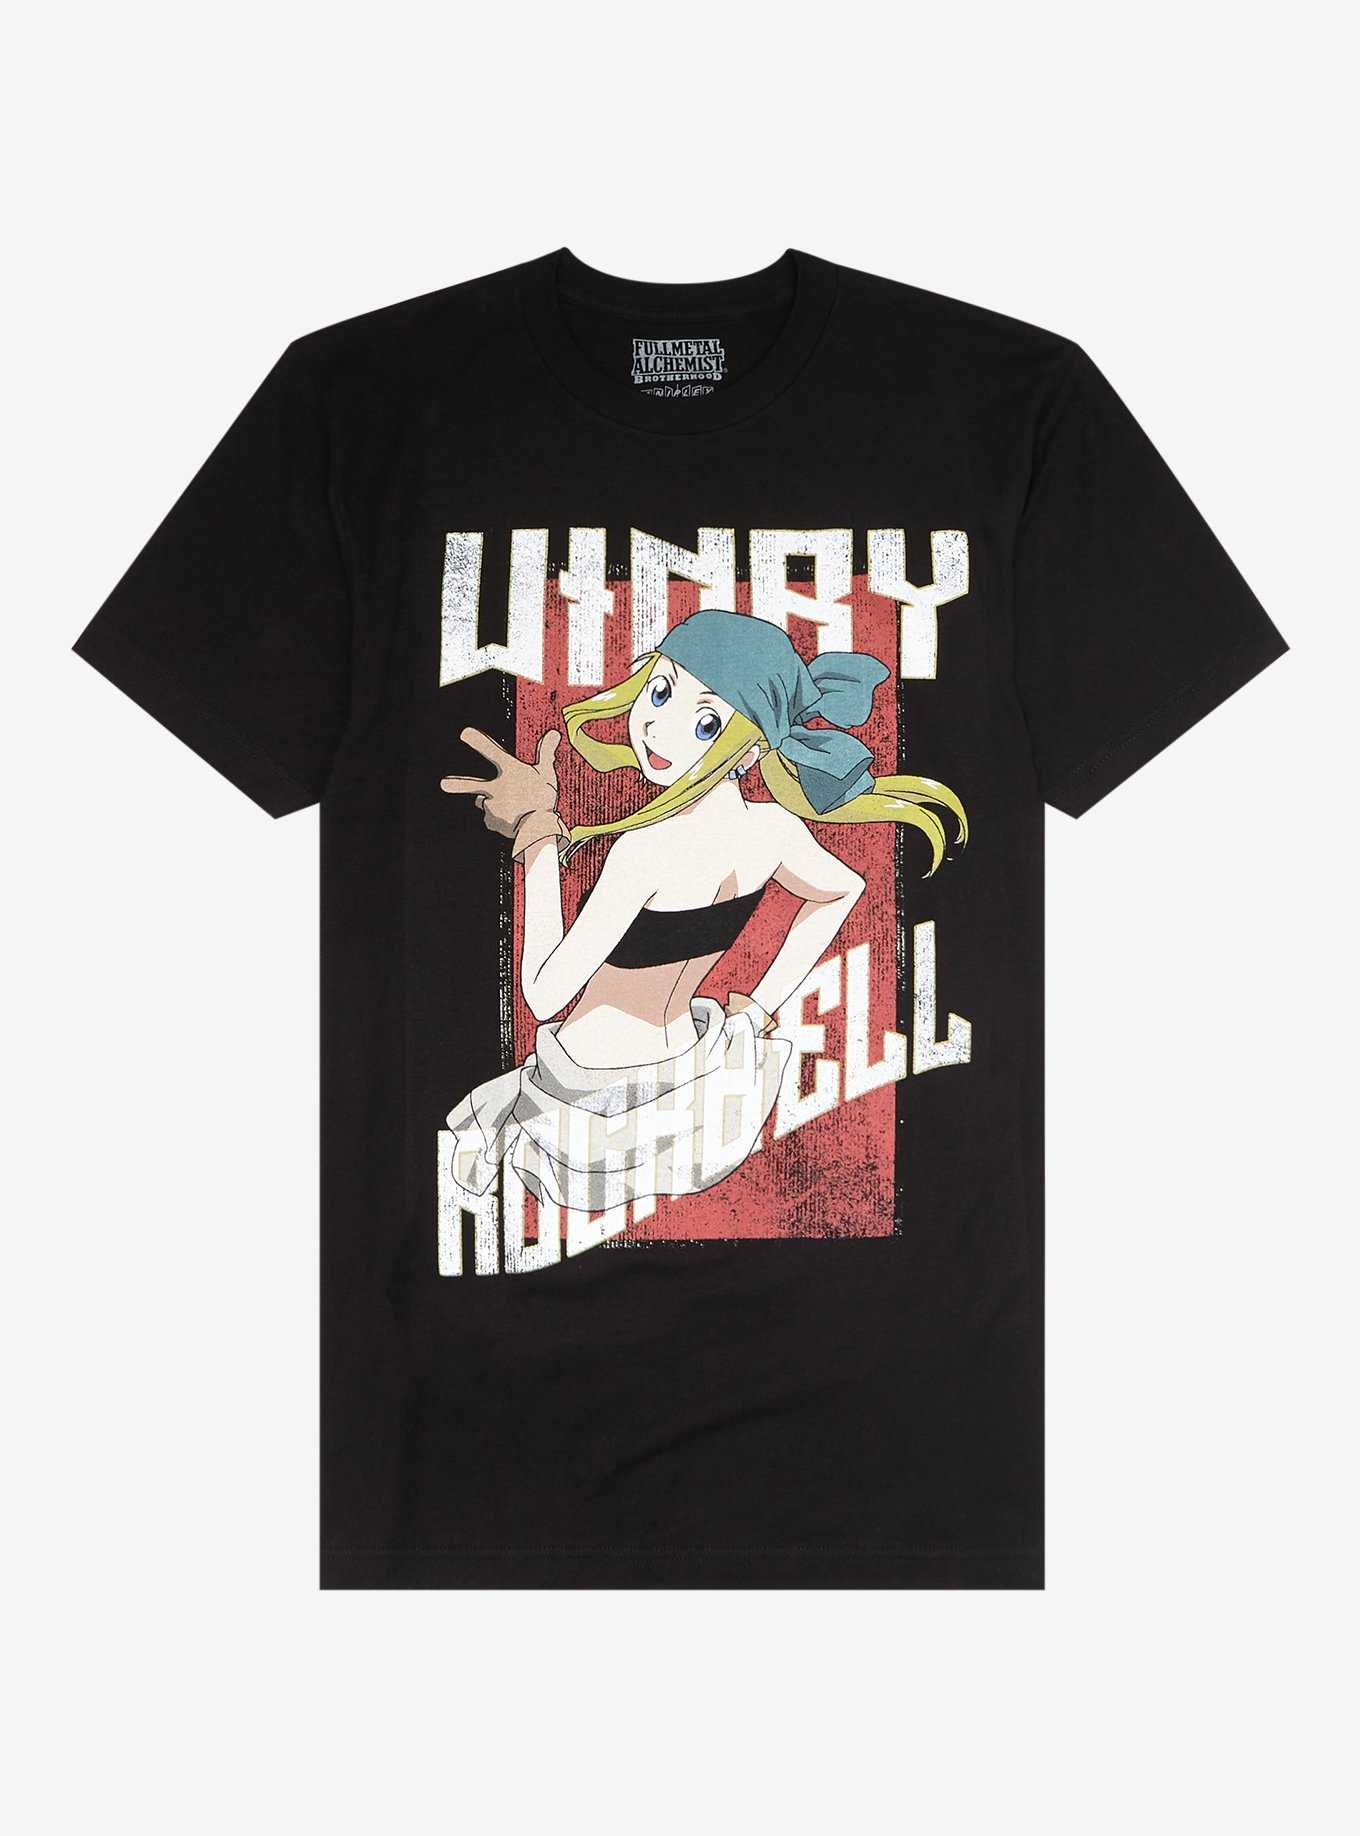 Fullmetal Alchemist Winry Rockbell T-Shirt, , hi-res